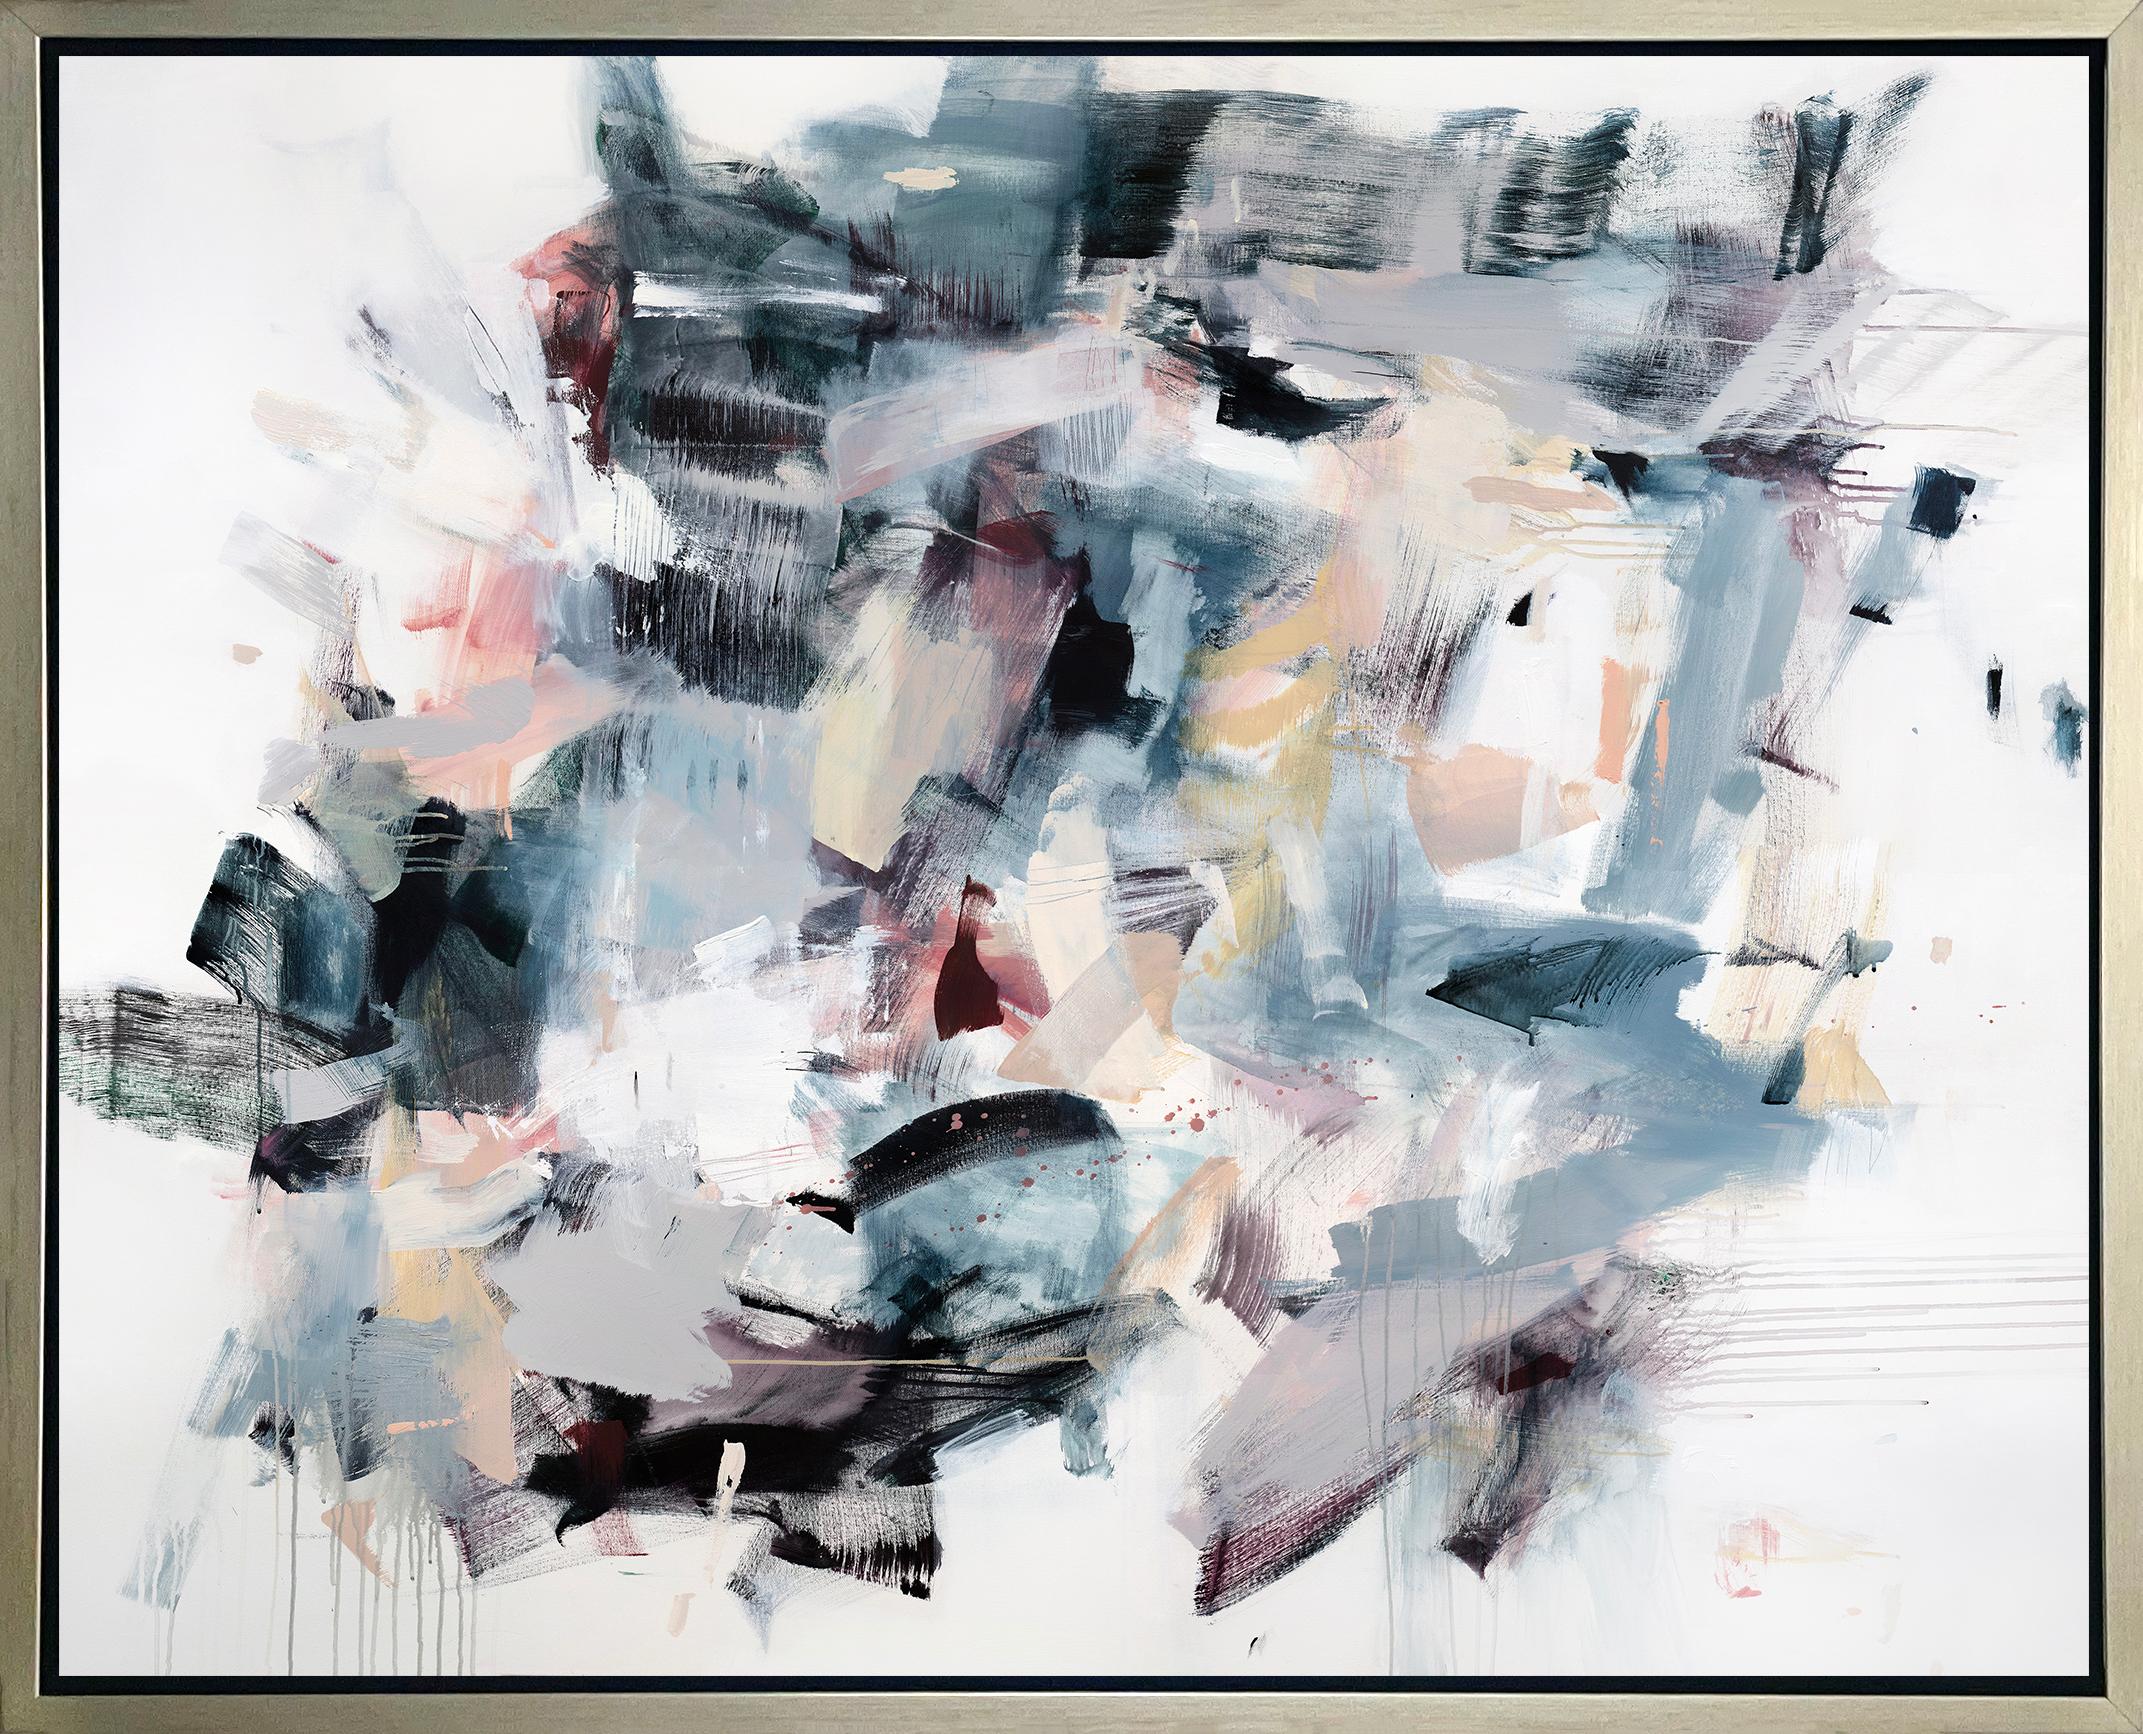 Kelly Rossetti Abstract Print – ""Serotonin Overflow", gerahmter Giclee-Druck in limitierter Auflage, 24 Zoll x 30 Zoll